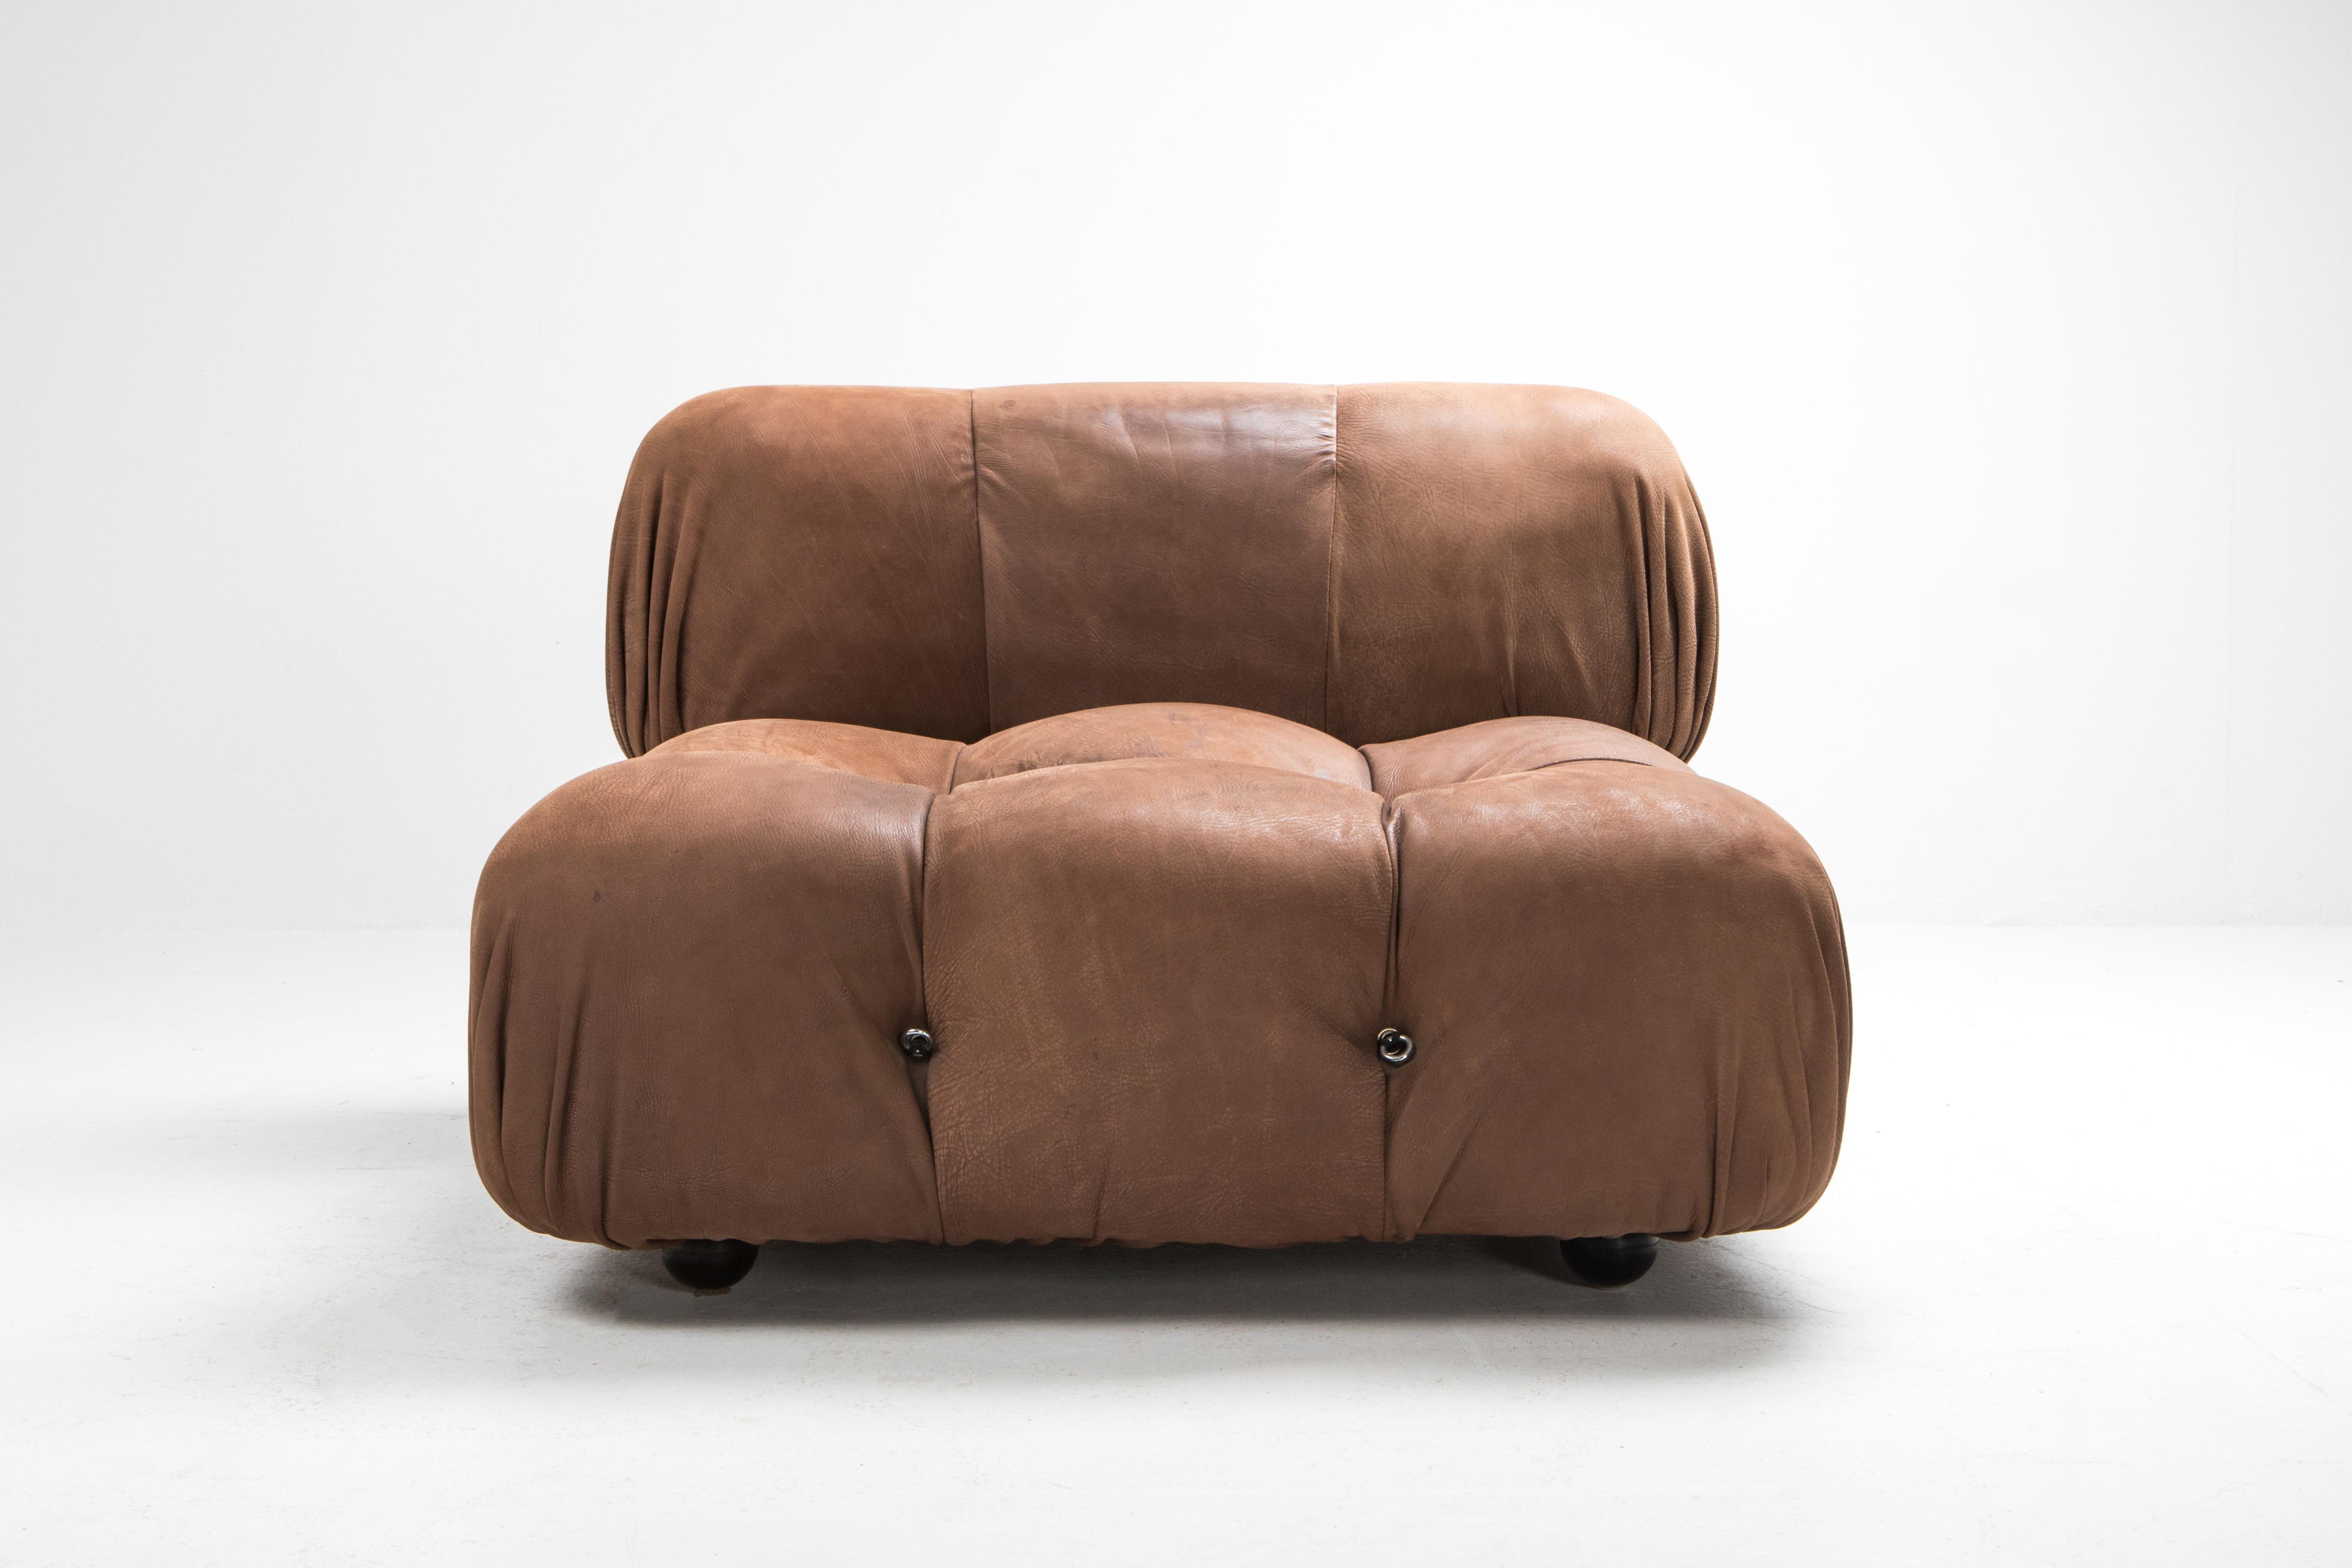 20th Century Camaleonda Sectional Sofa in Original Brown Leather by Mario Bellini